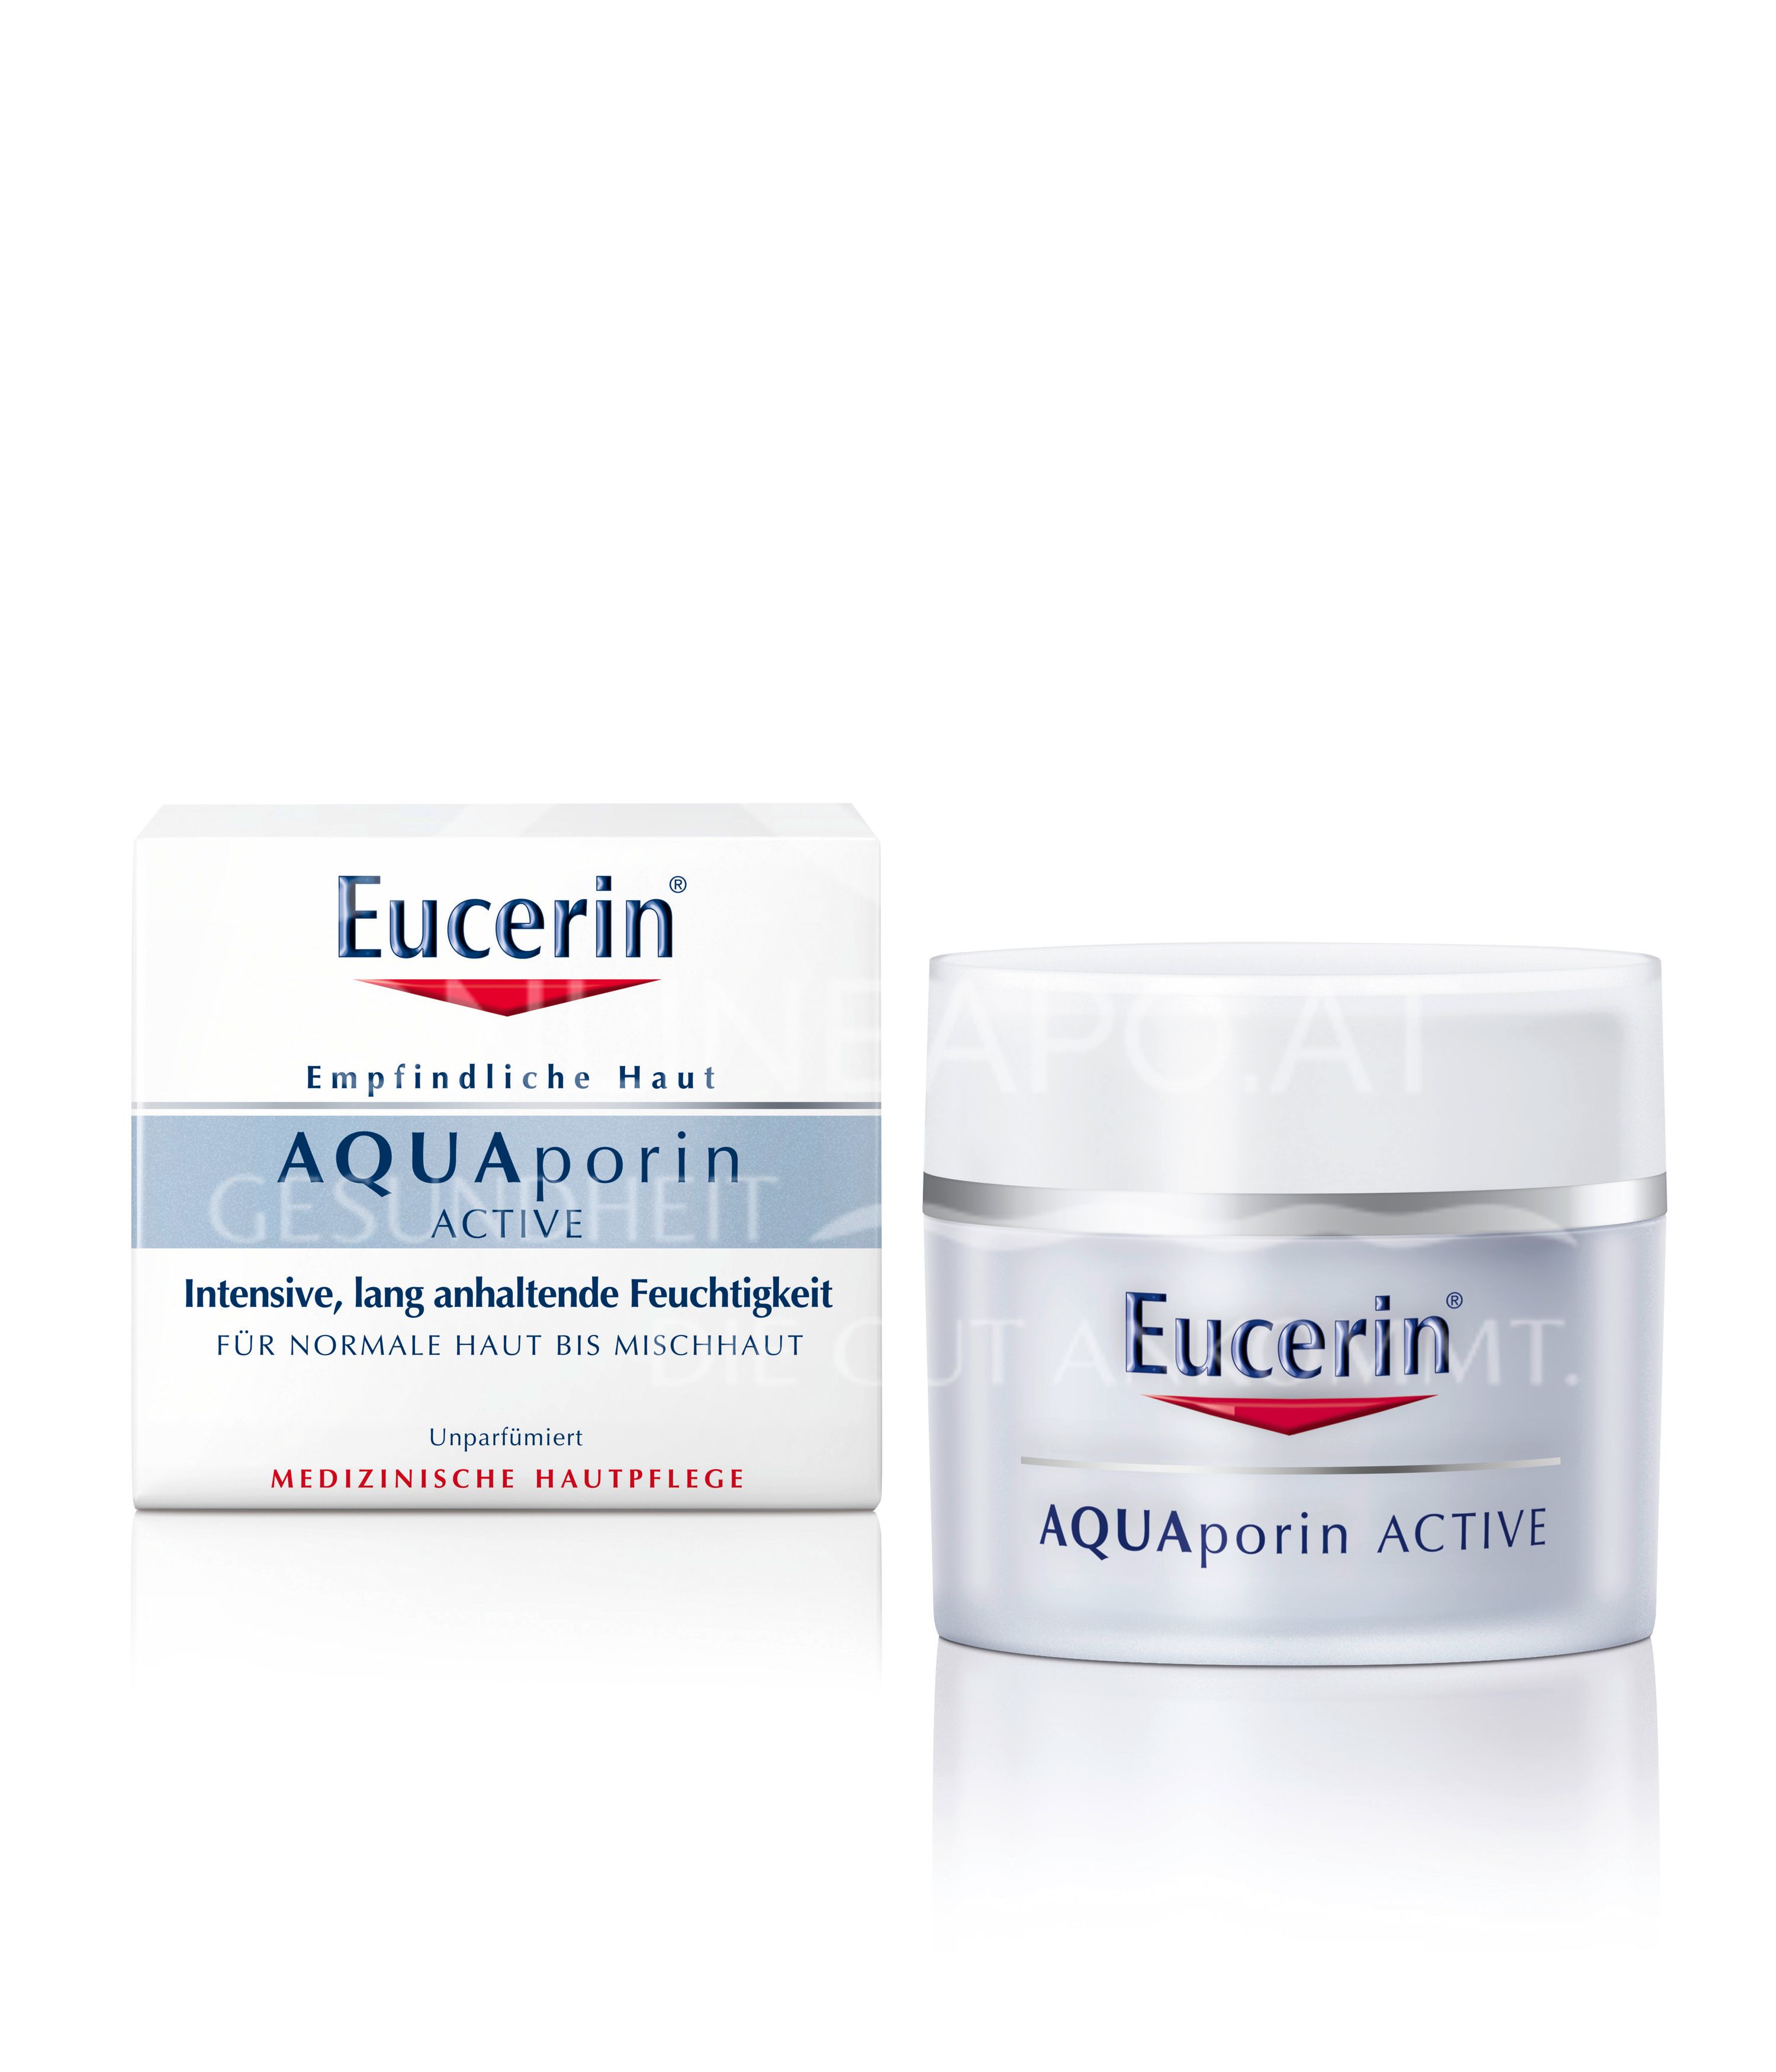 Eucerin® AQUAporin ACTIVE für normale Haut bis Mischhaut